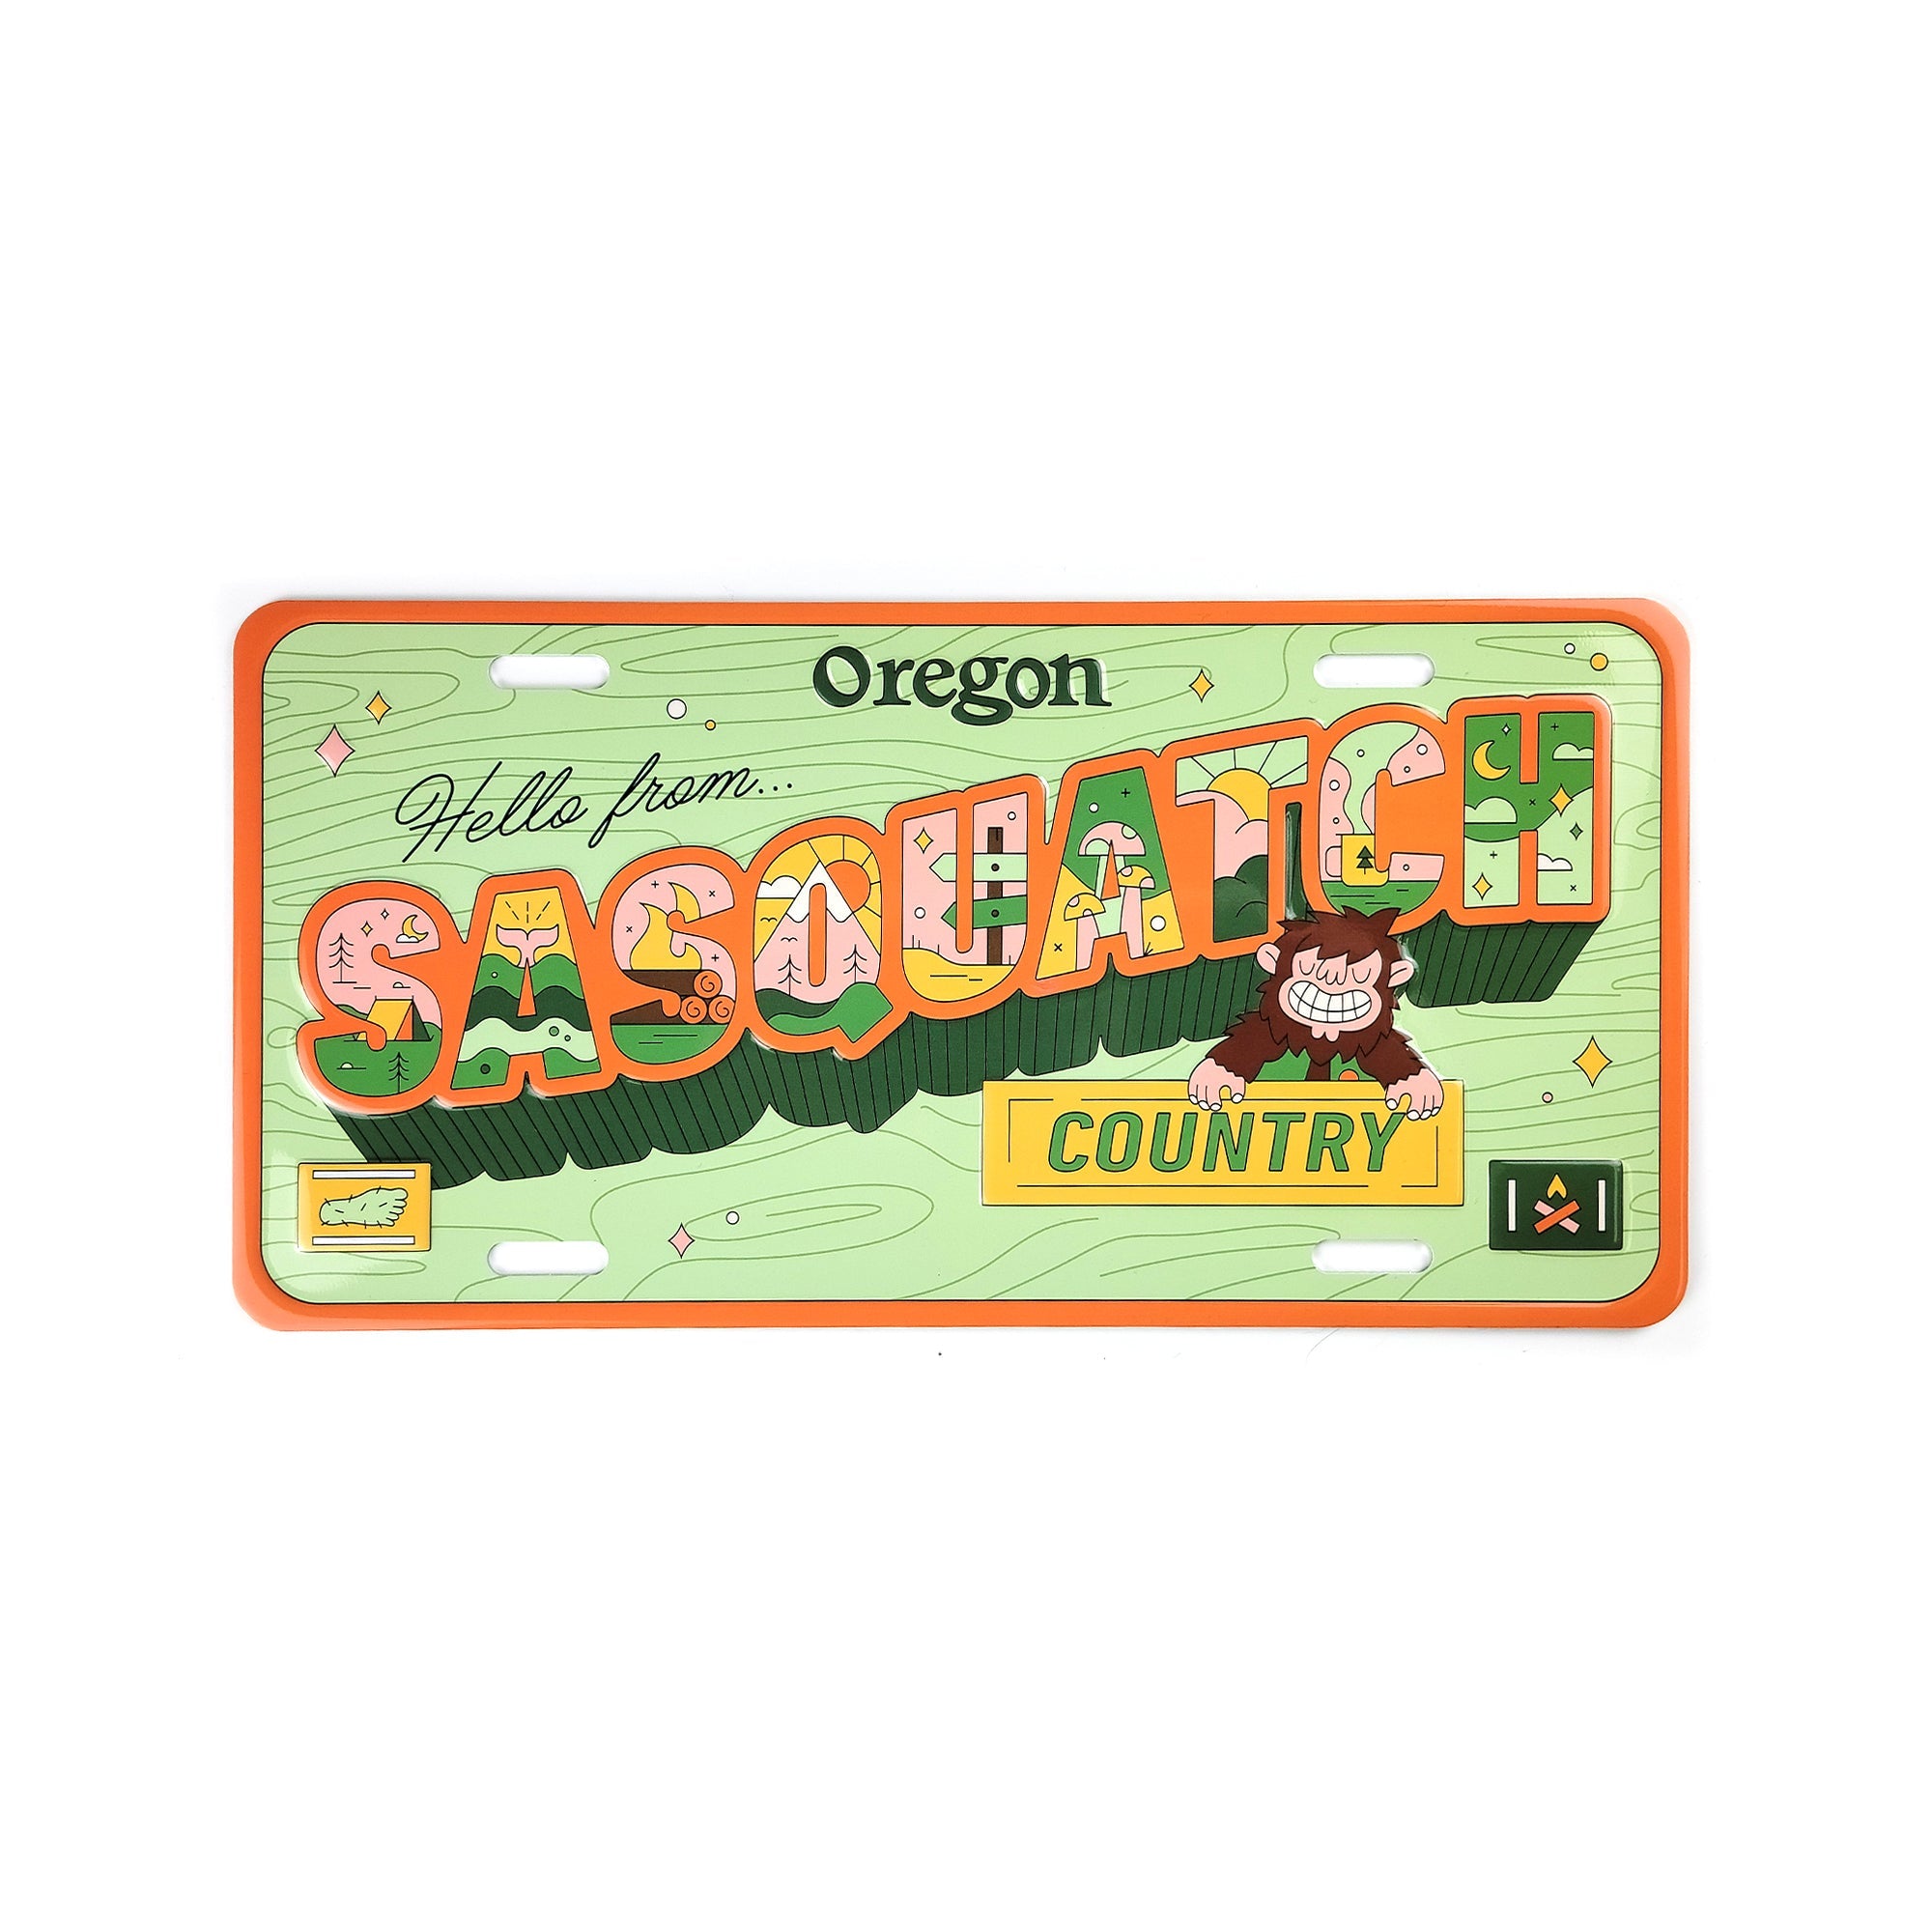 Hello From Sasquatch Souvenir License Plate - Vehicle License Plates - Hello From Oregon